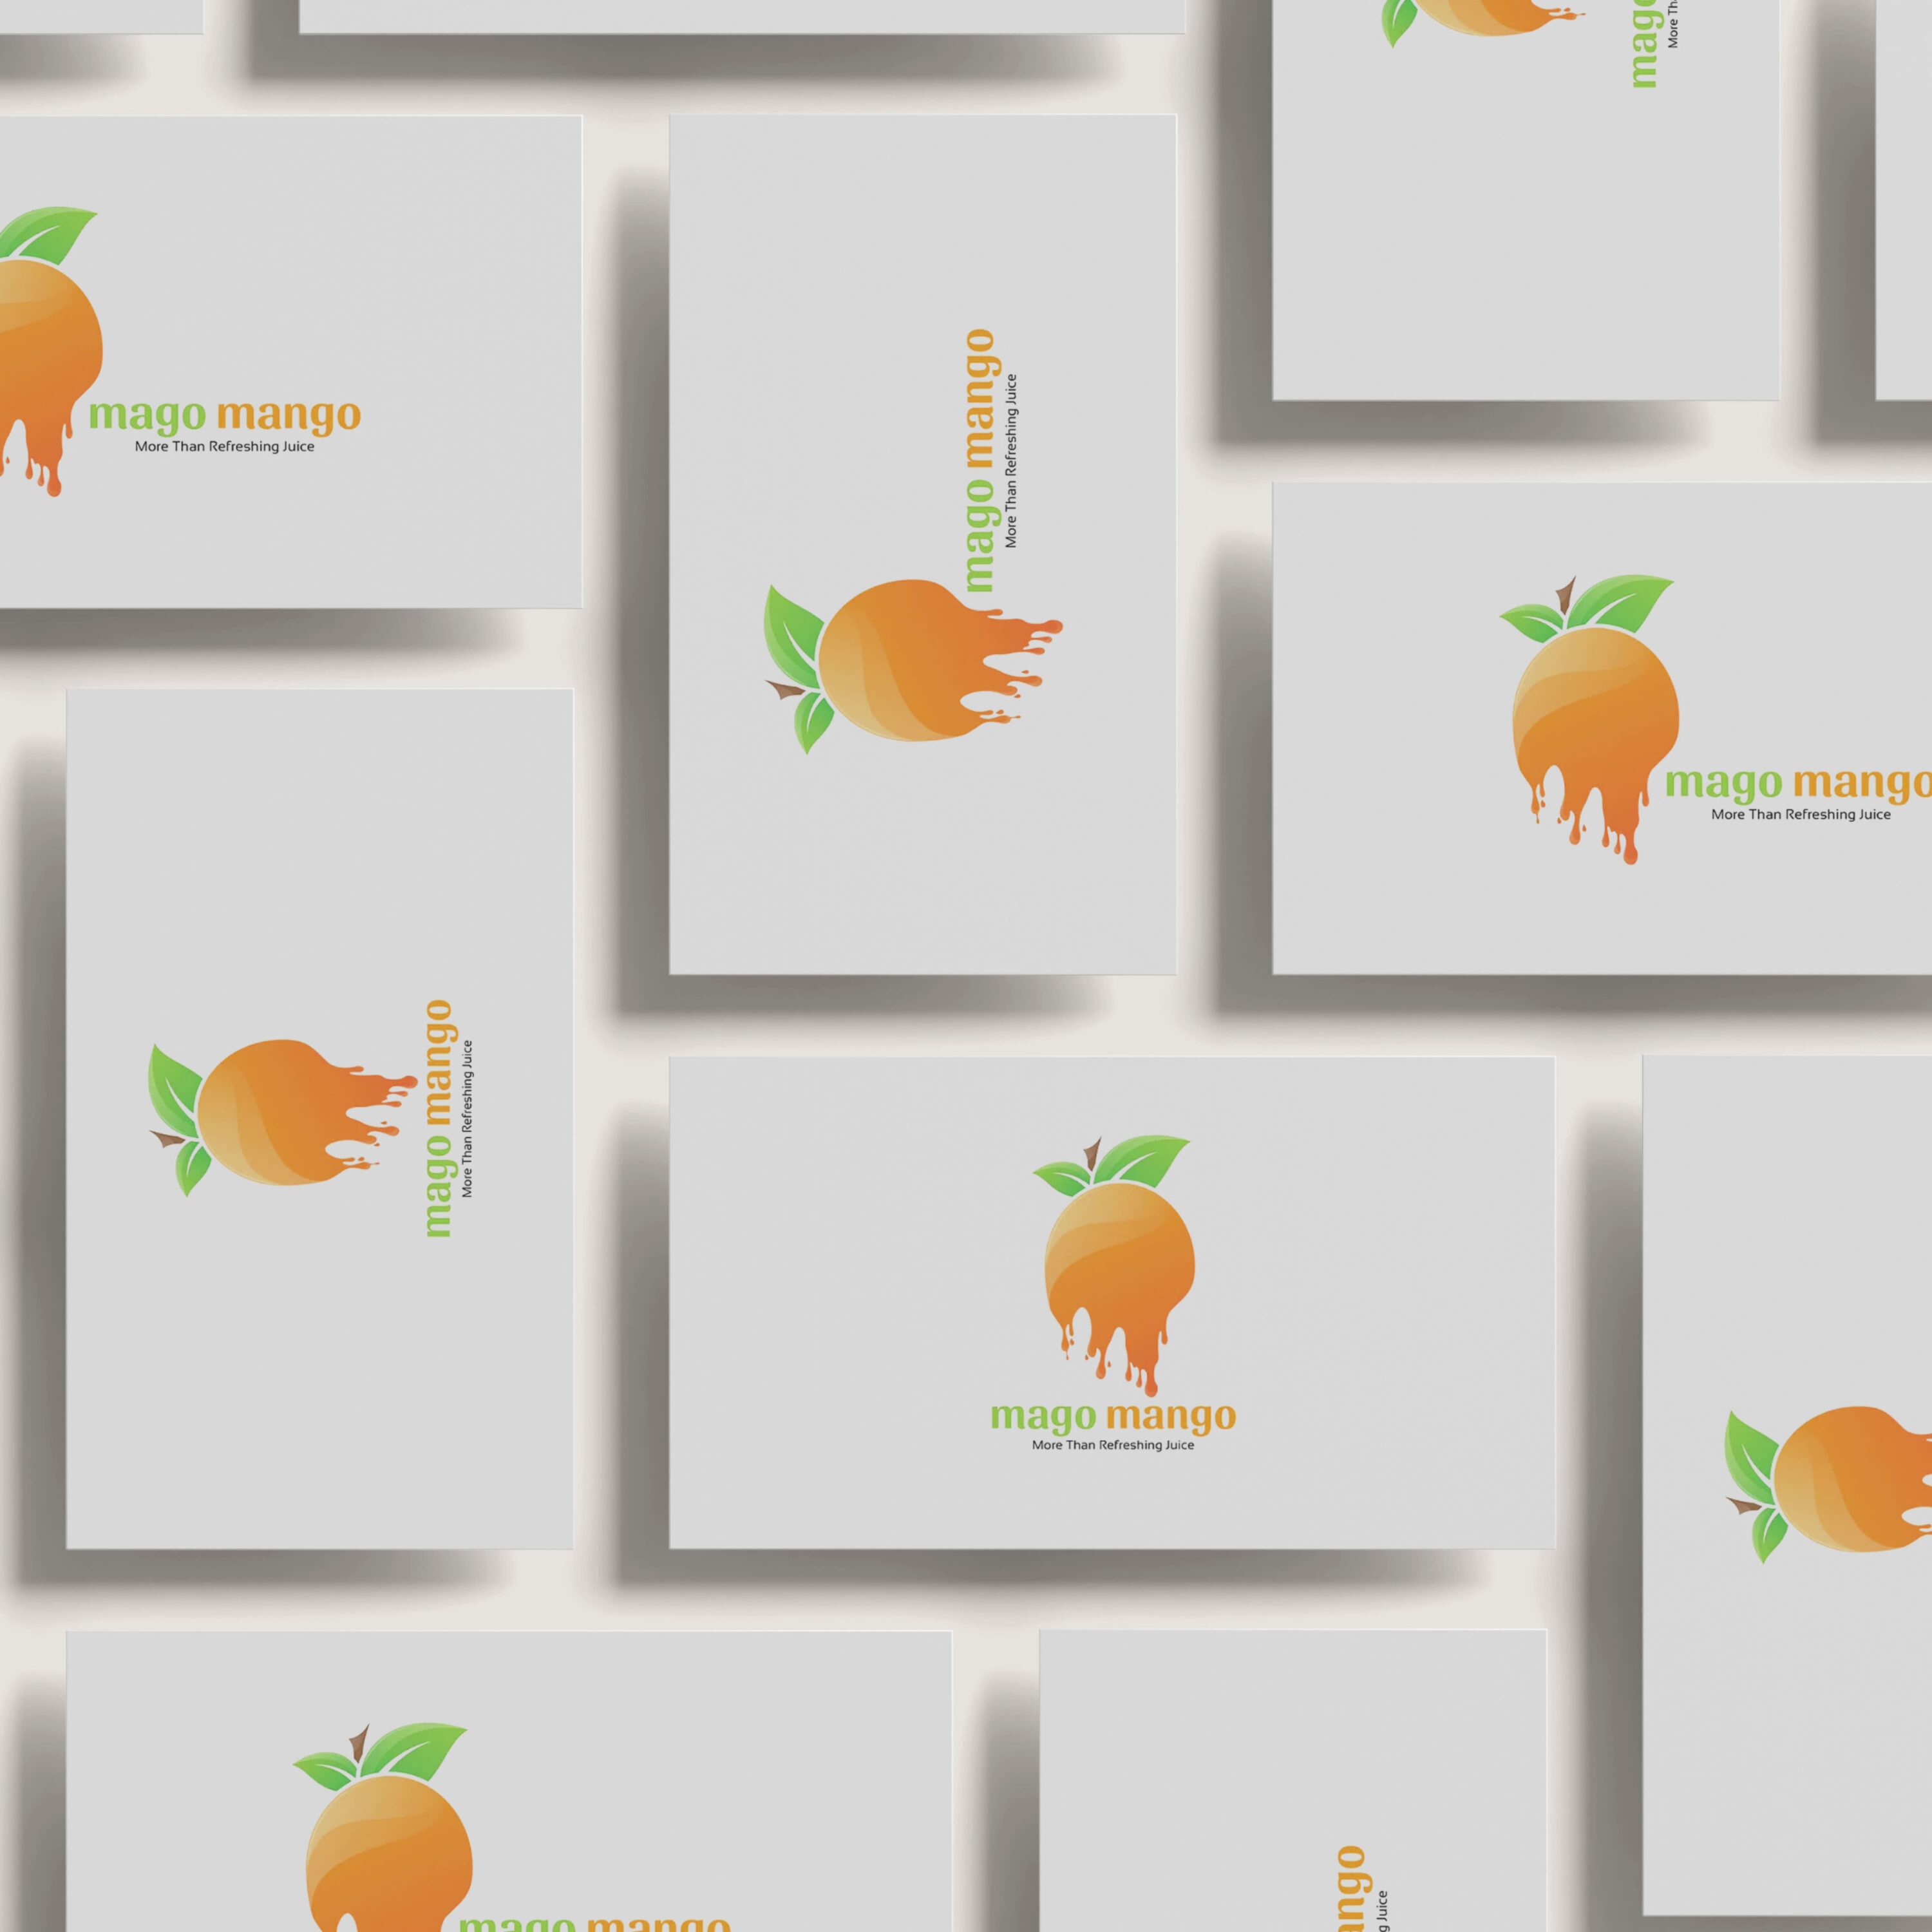 Mago Mango / Juice - Logo Template cover.